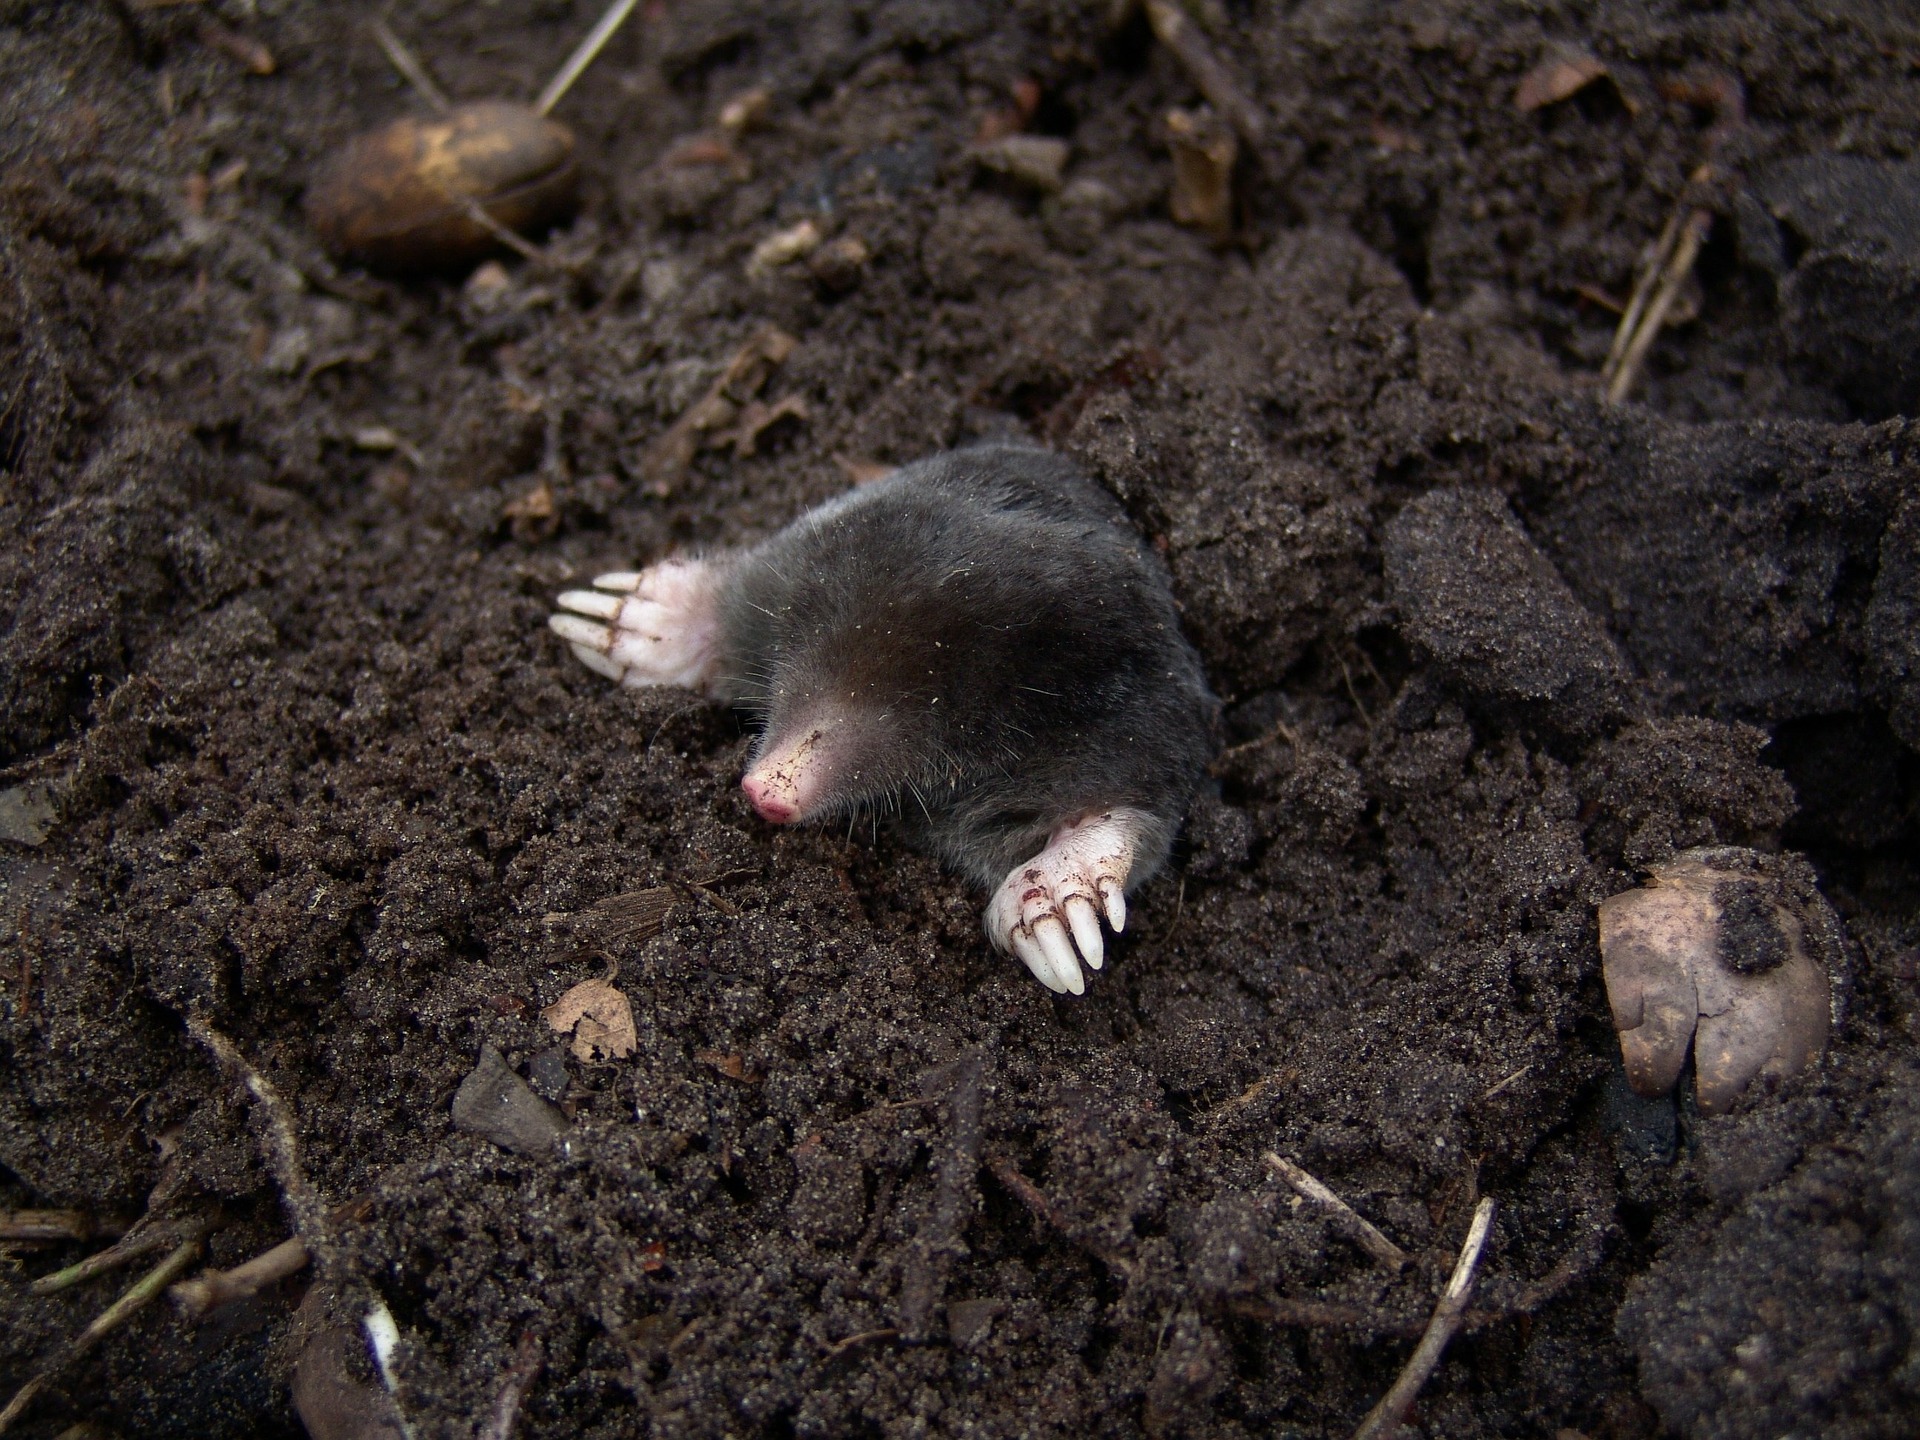 Moles How To Identify And Get Rid Of Moles In The Garden Or Yard The Old Farmer S Almanac,Mozzarella Caprese